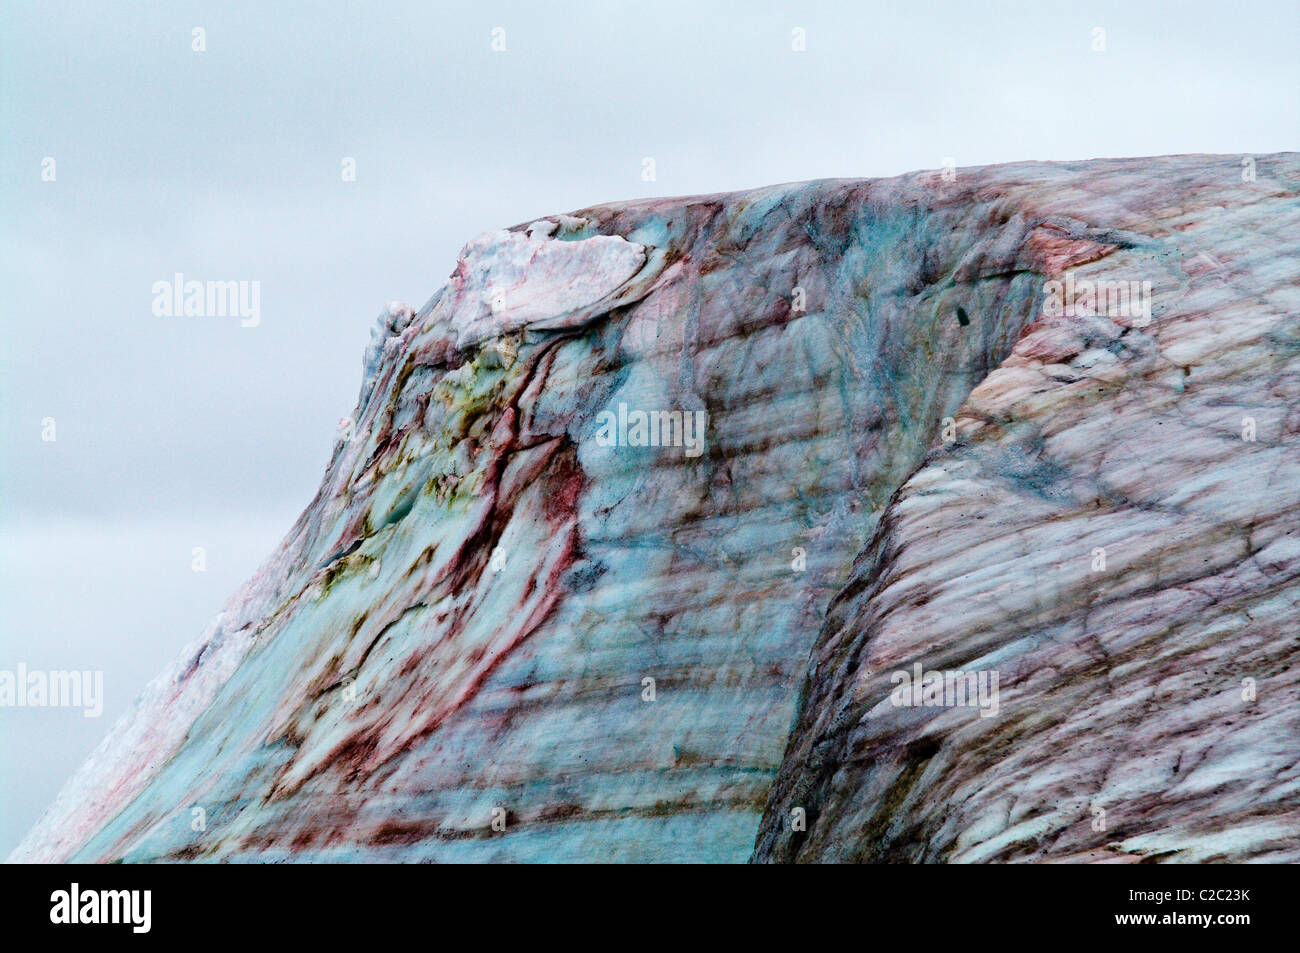 A rugged weathered glacier cap with pink Snow Algae, cryoalgae. Stock Photo